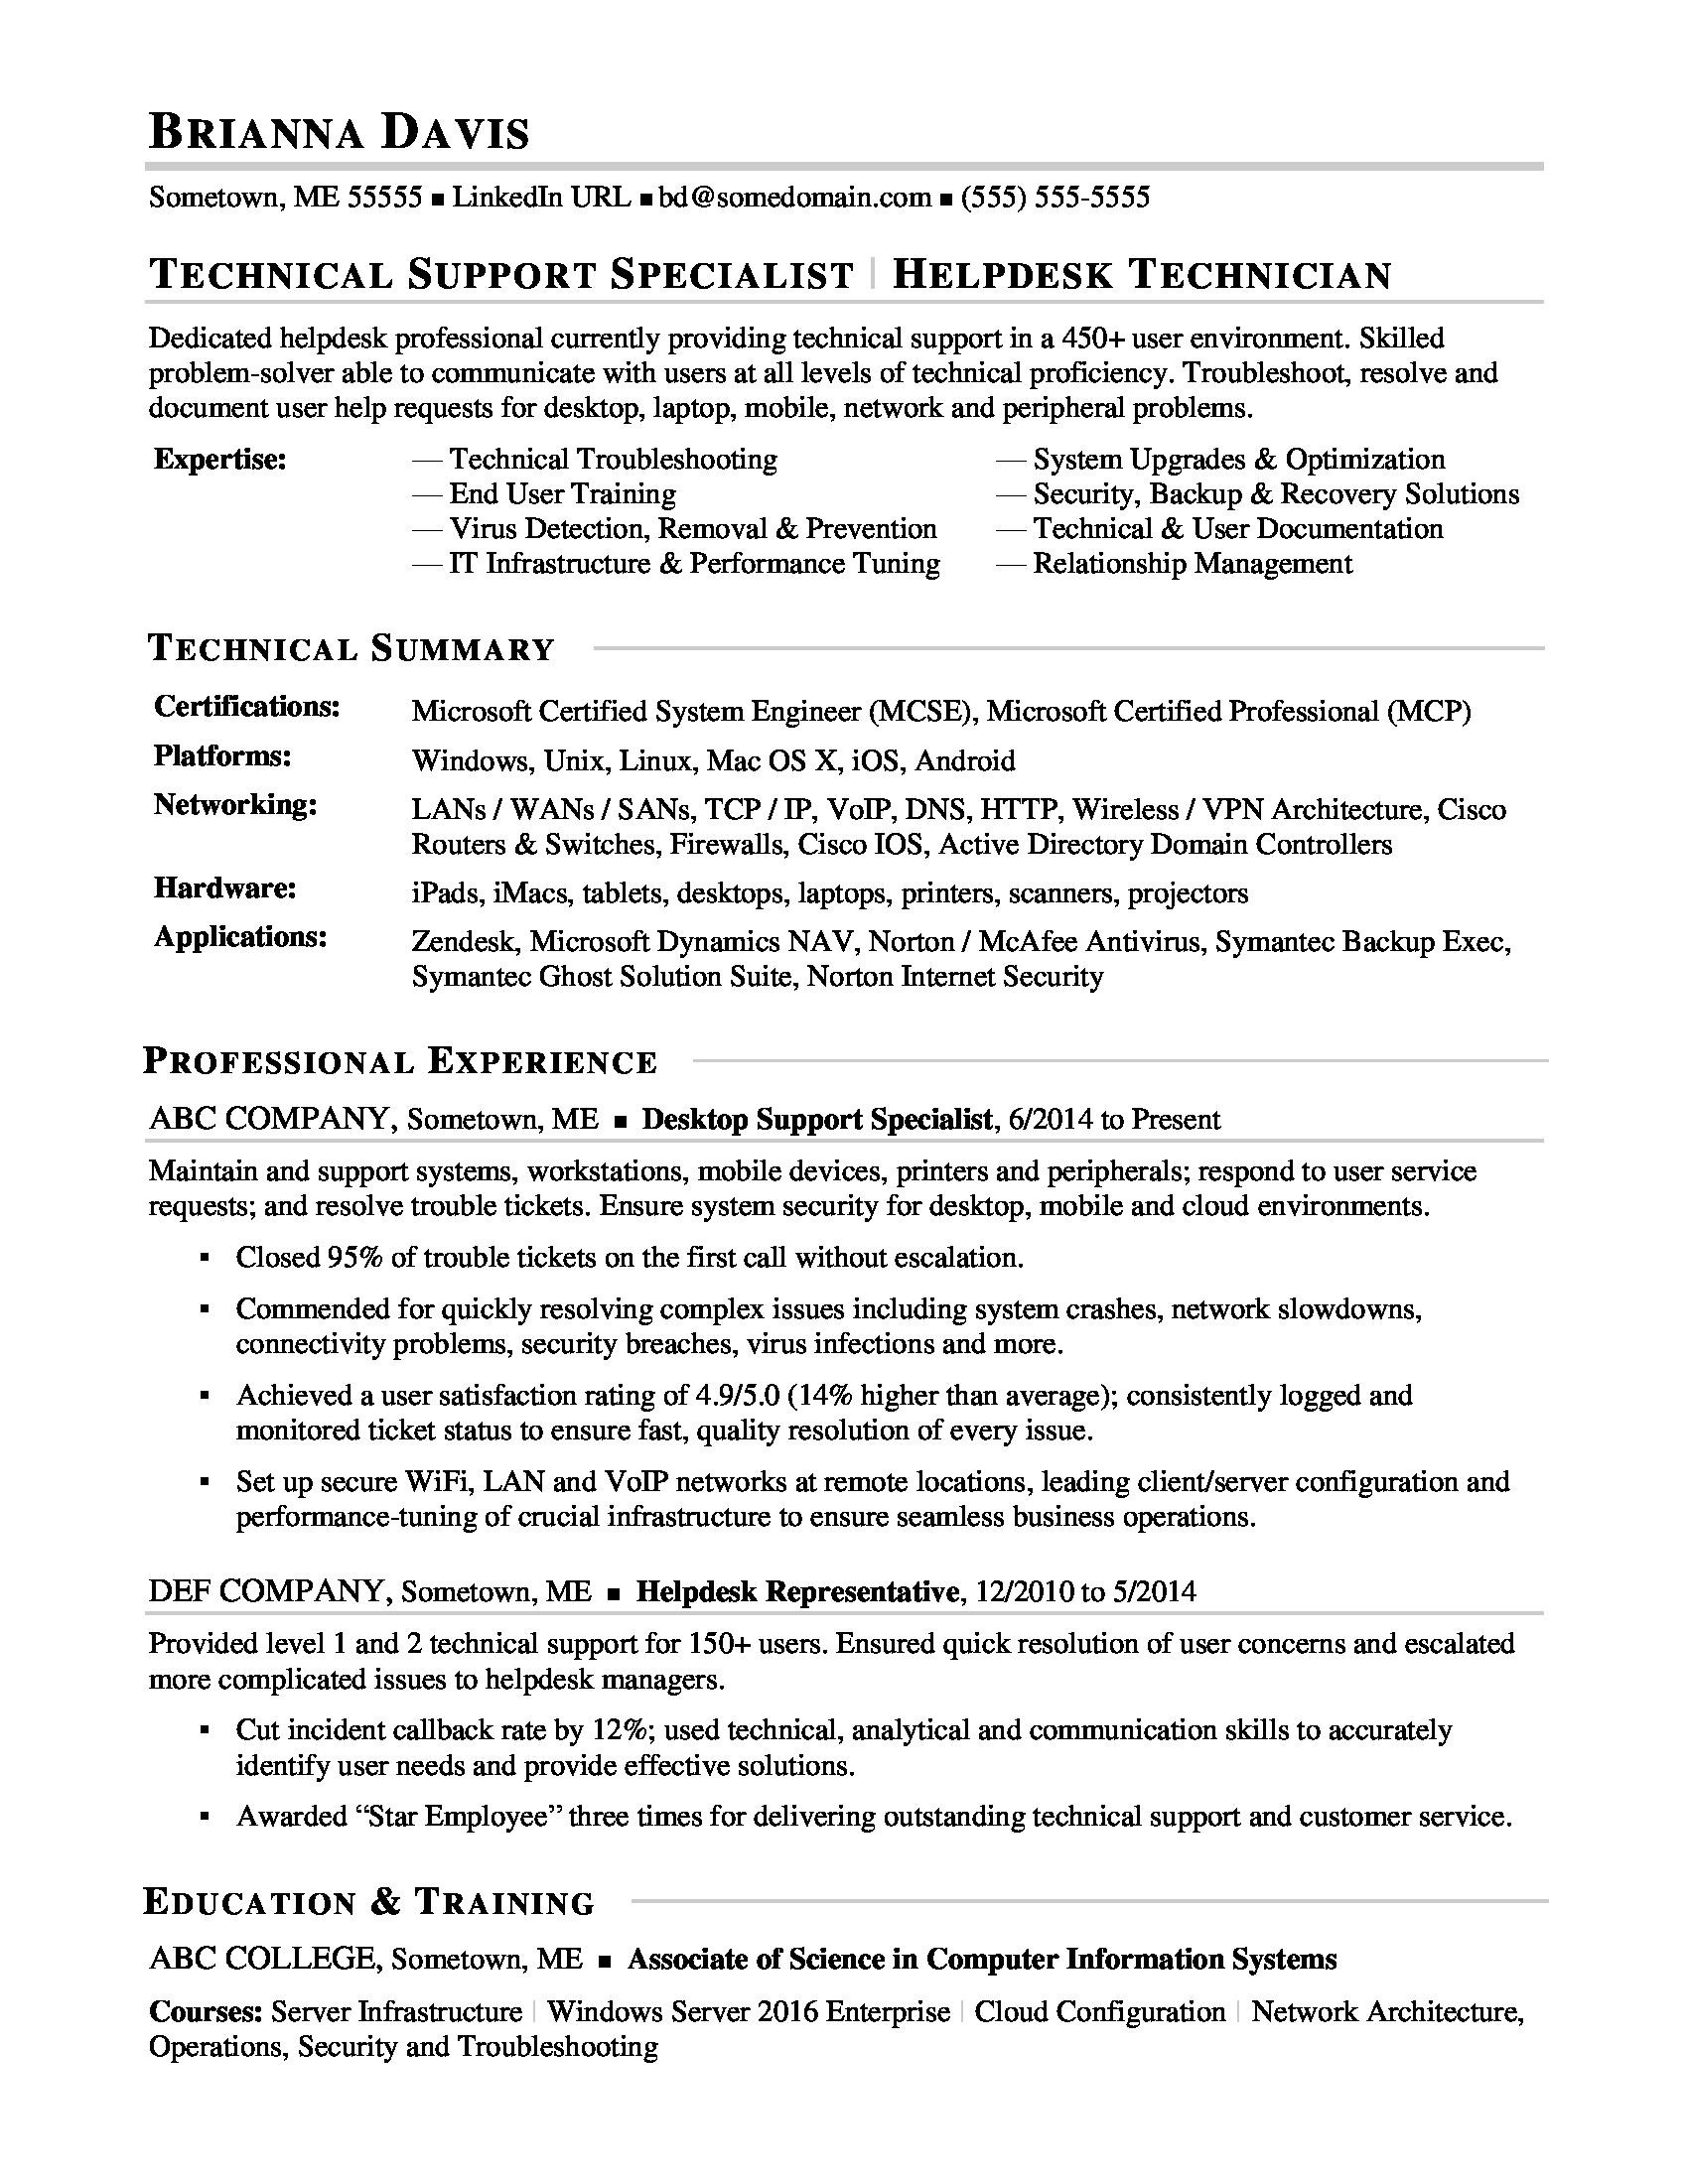 Sample Resume for Server Support Engineer Sample Resume for Experienced It Help Desk Employee Monster.com